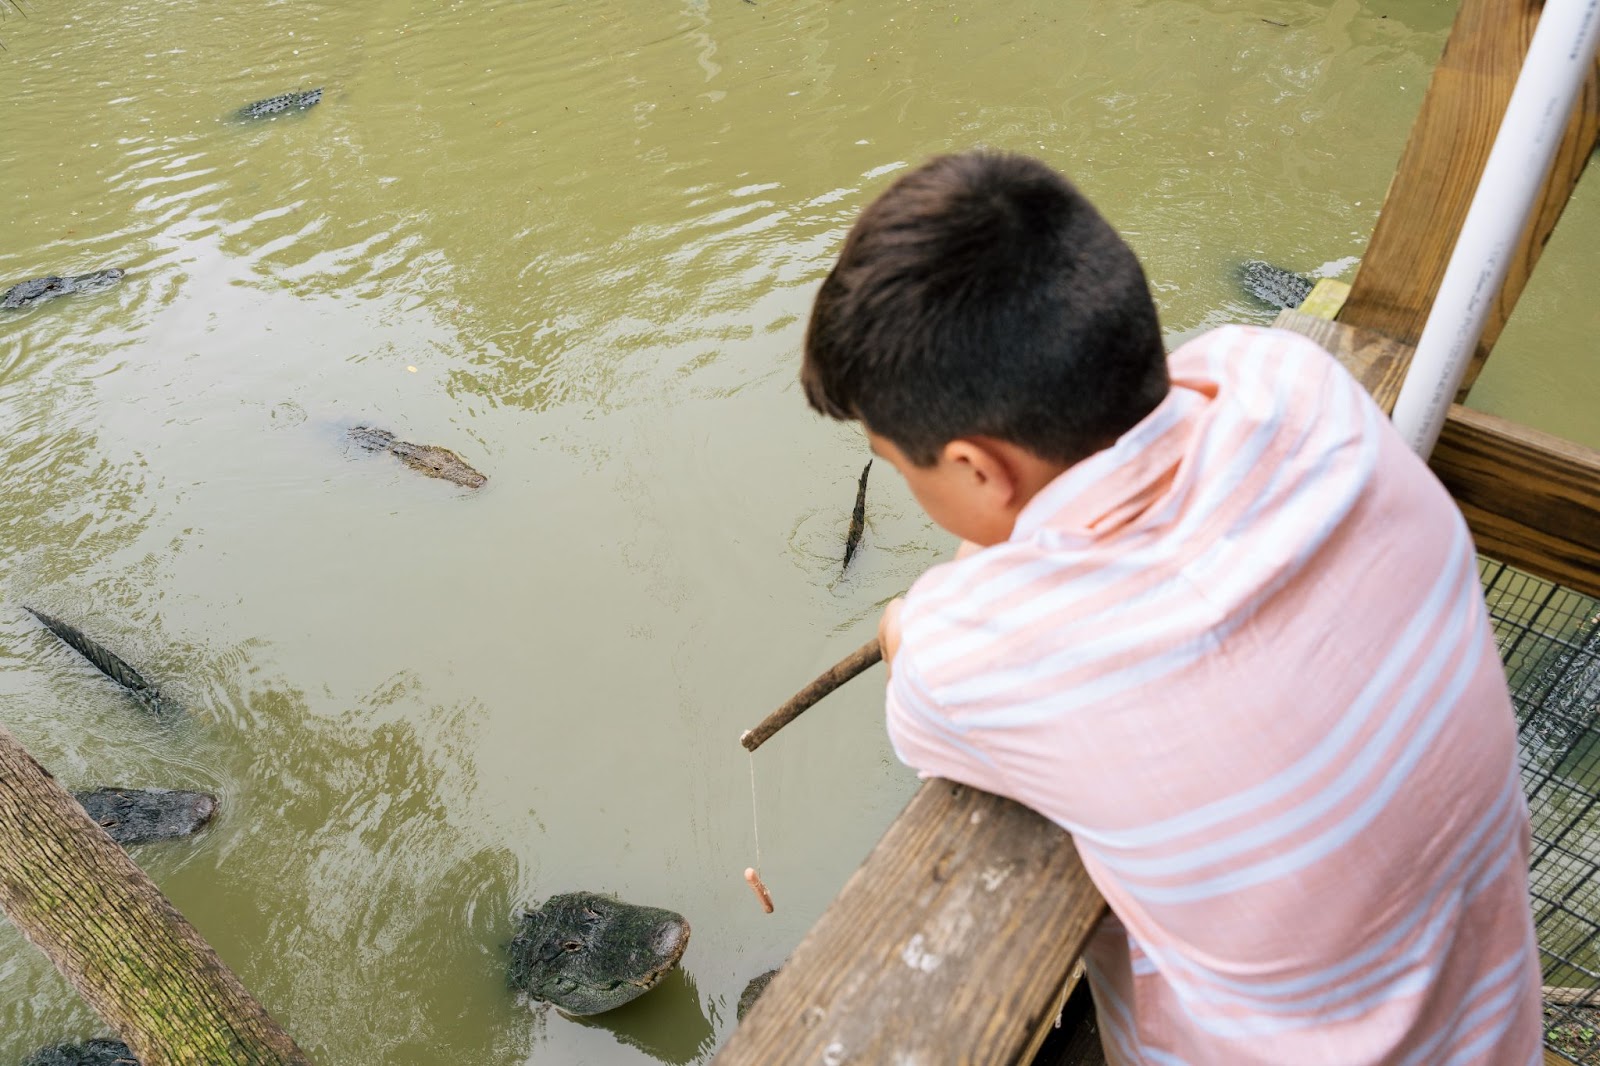 A child experiences feeding alligators at Wild Florida's Gator Park